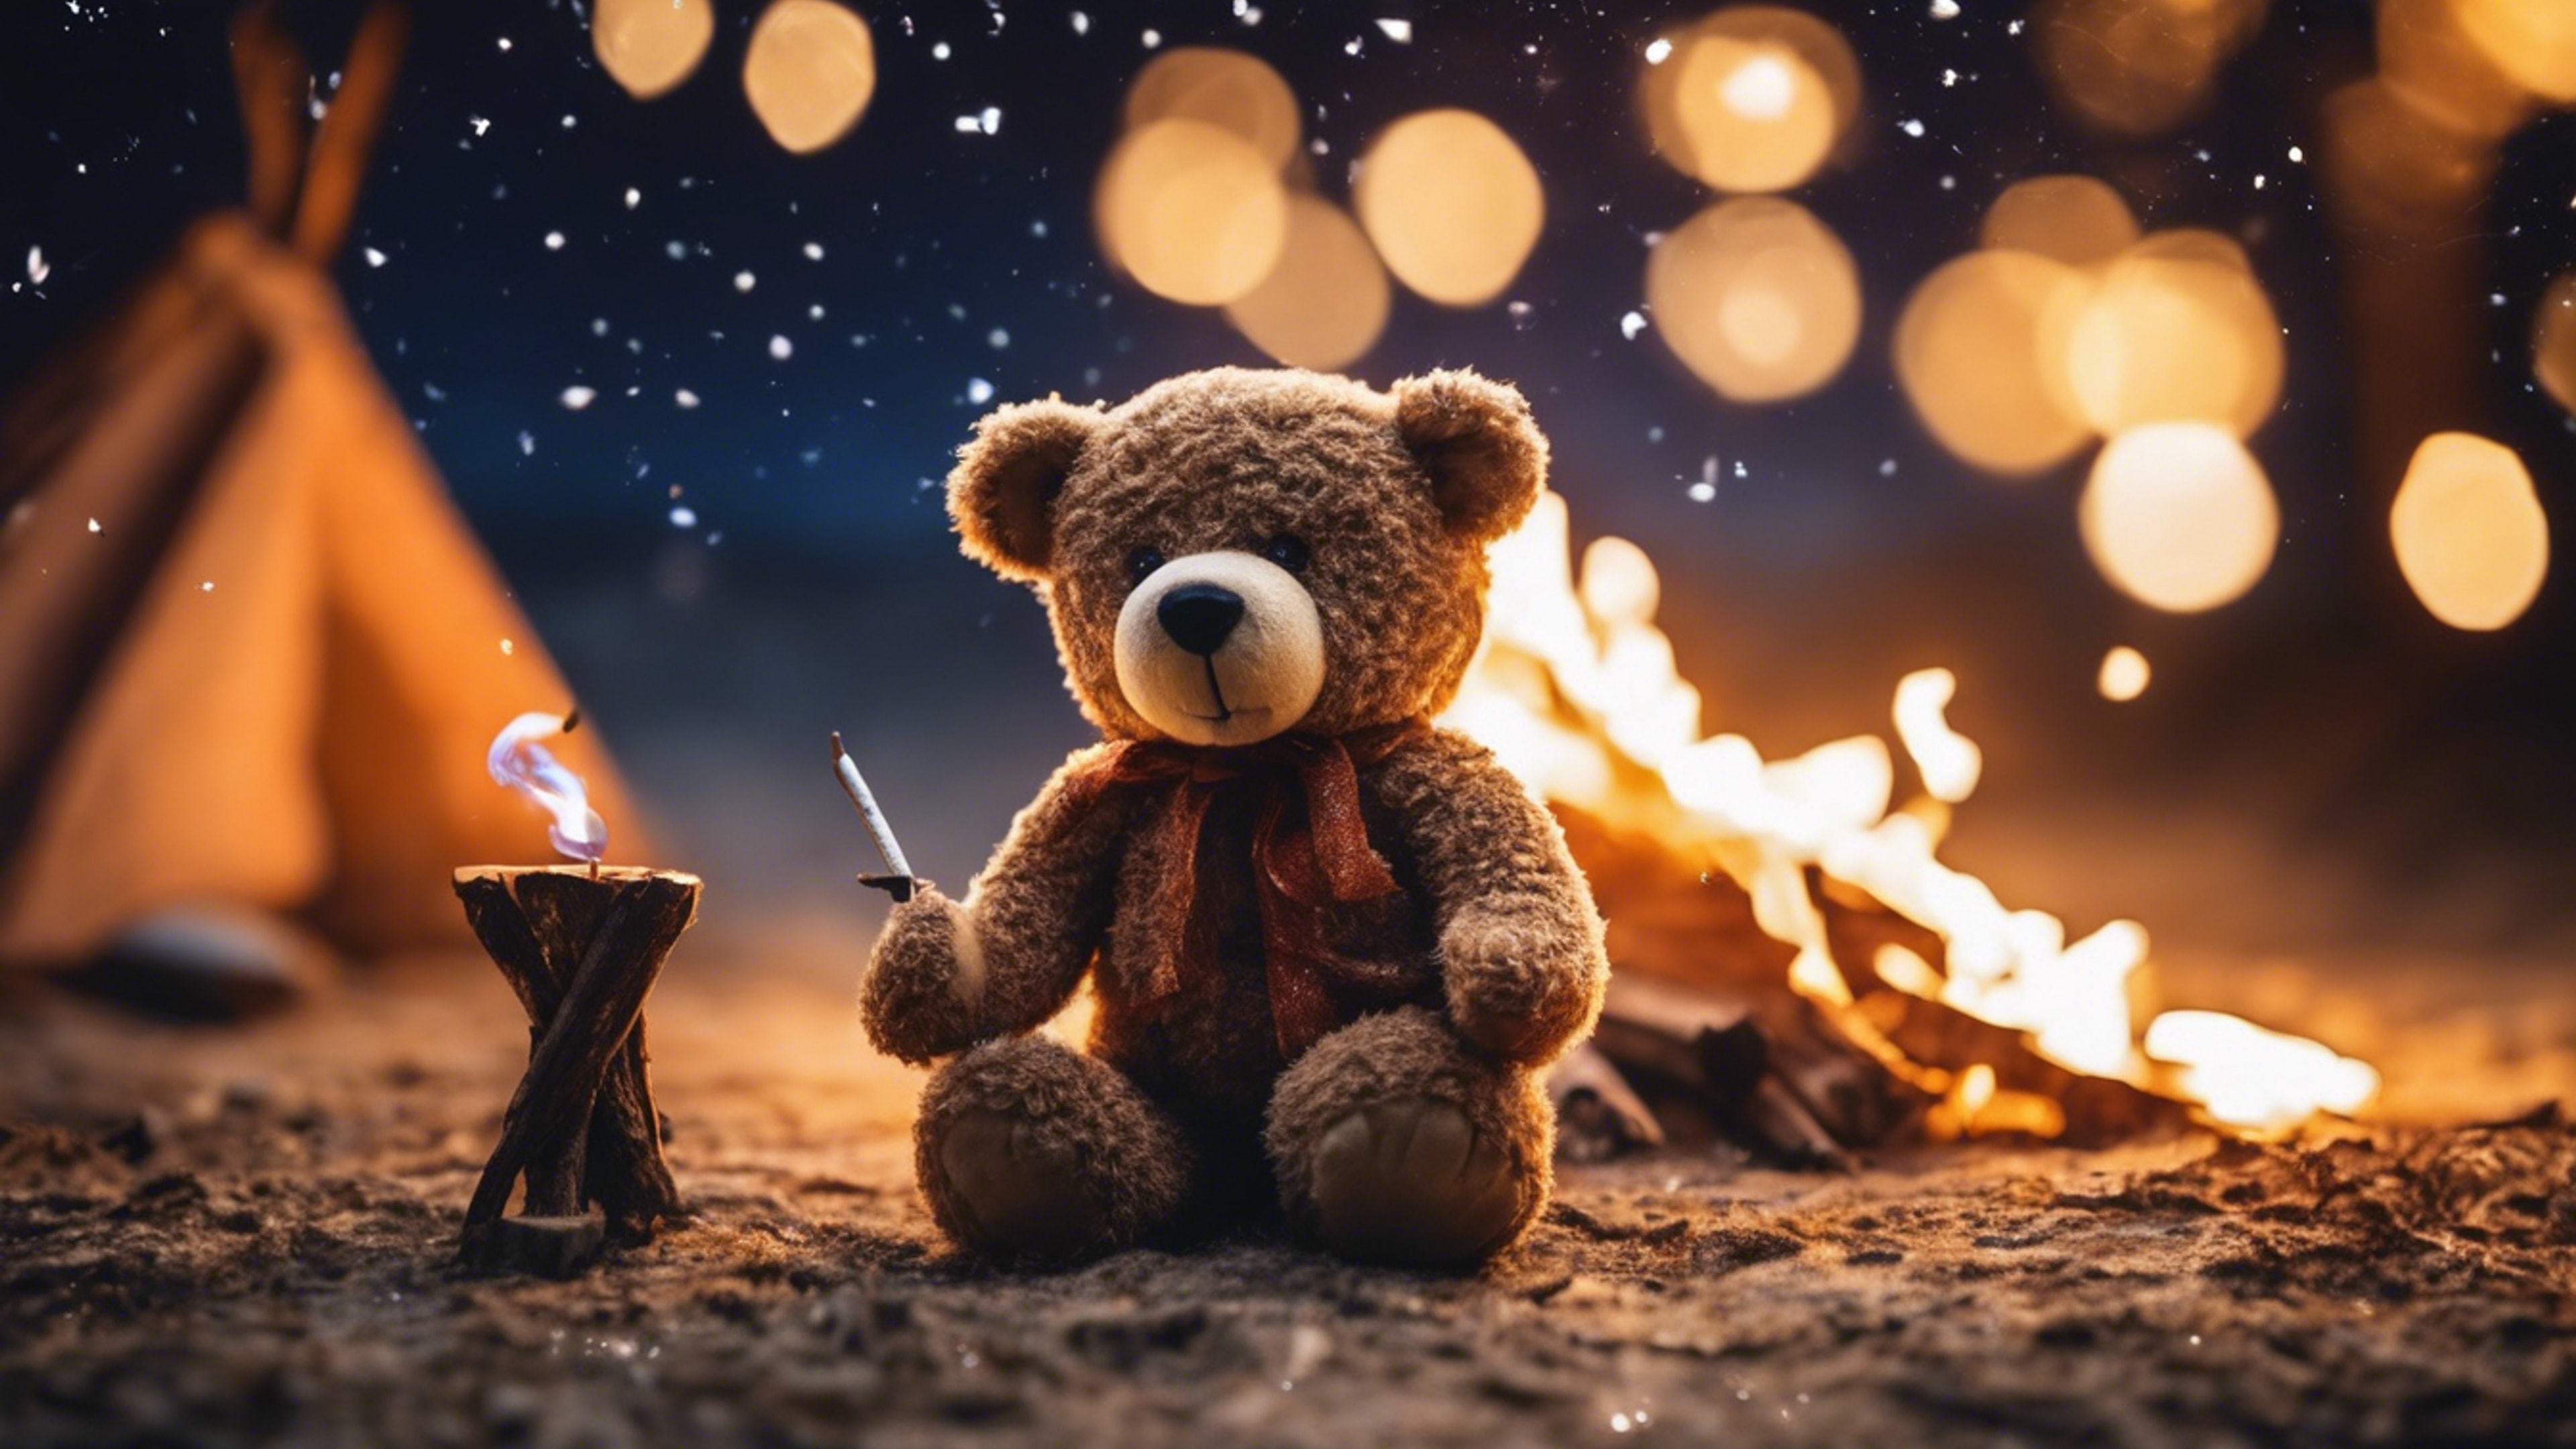 A teddy bear sitting by a campfire, roasting marshmallows on a stick under the starry night sky.壁紙[5f24cf5a5e0b45edac30]